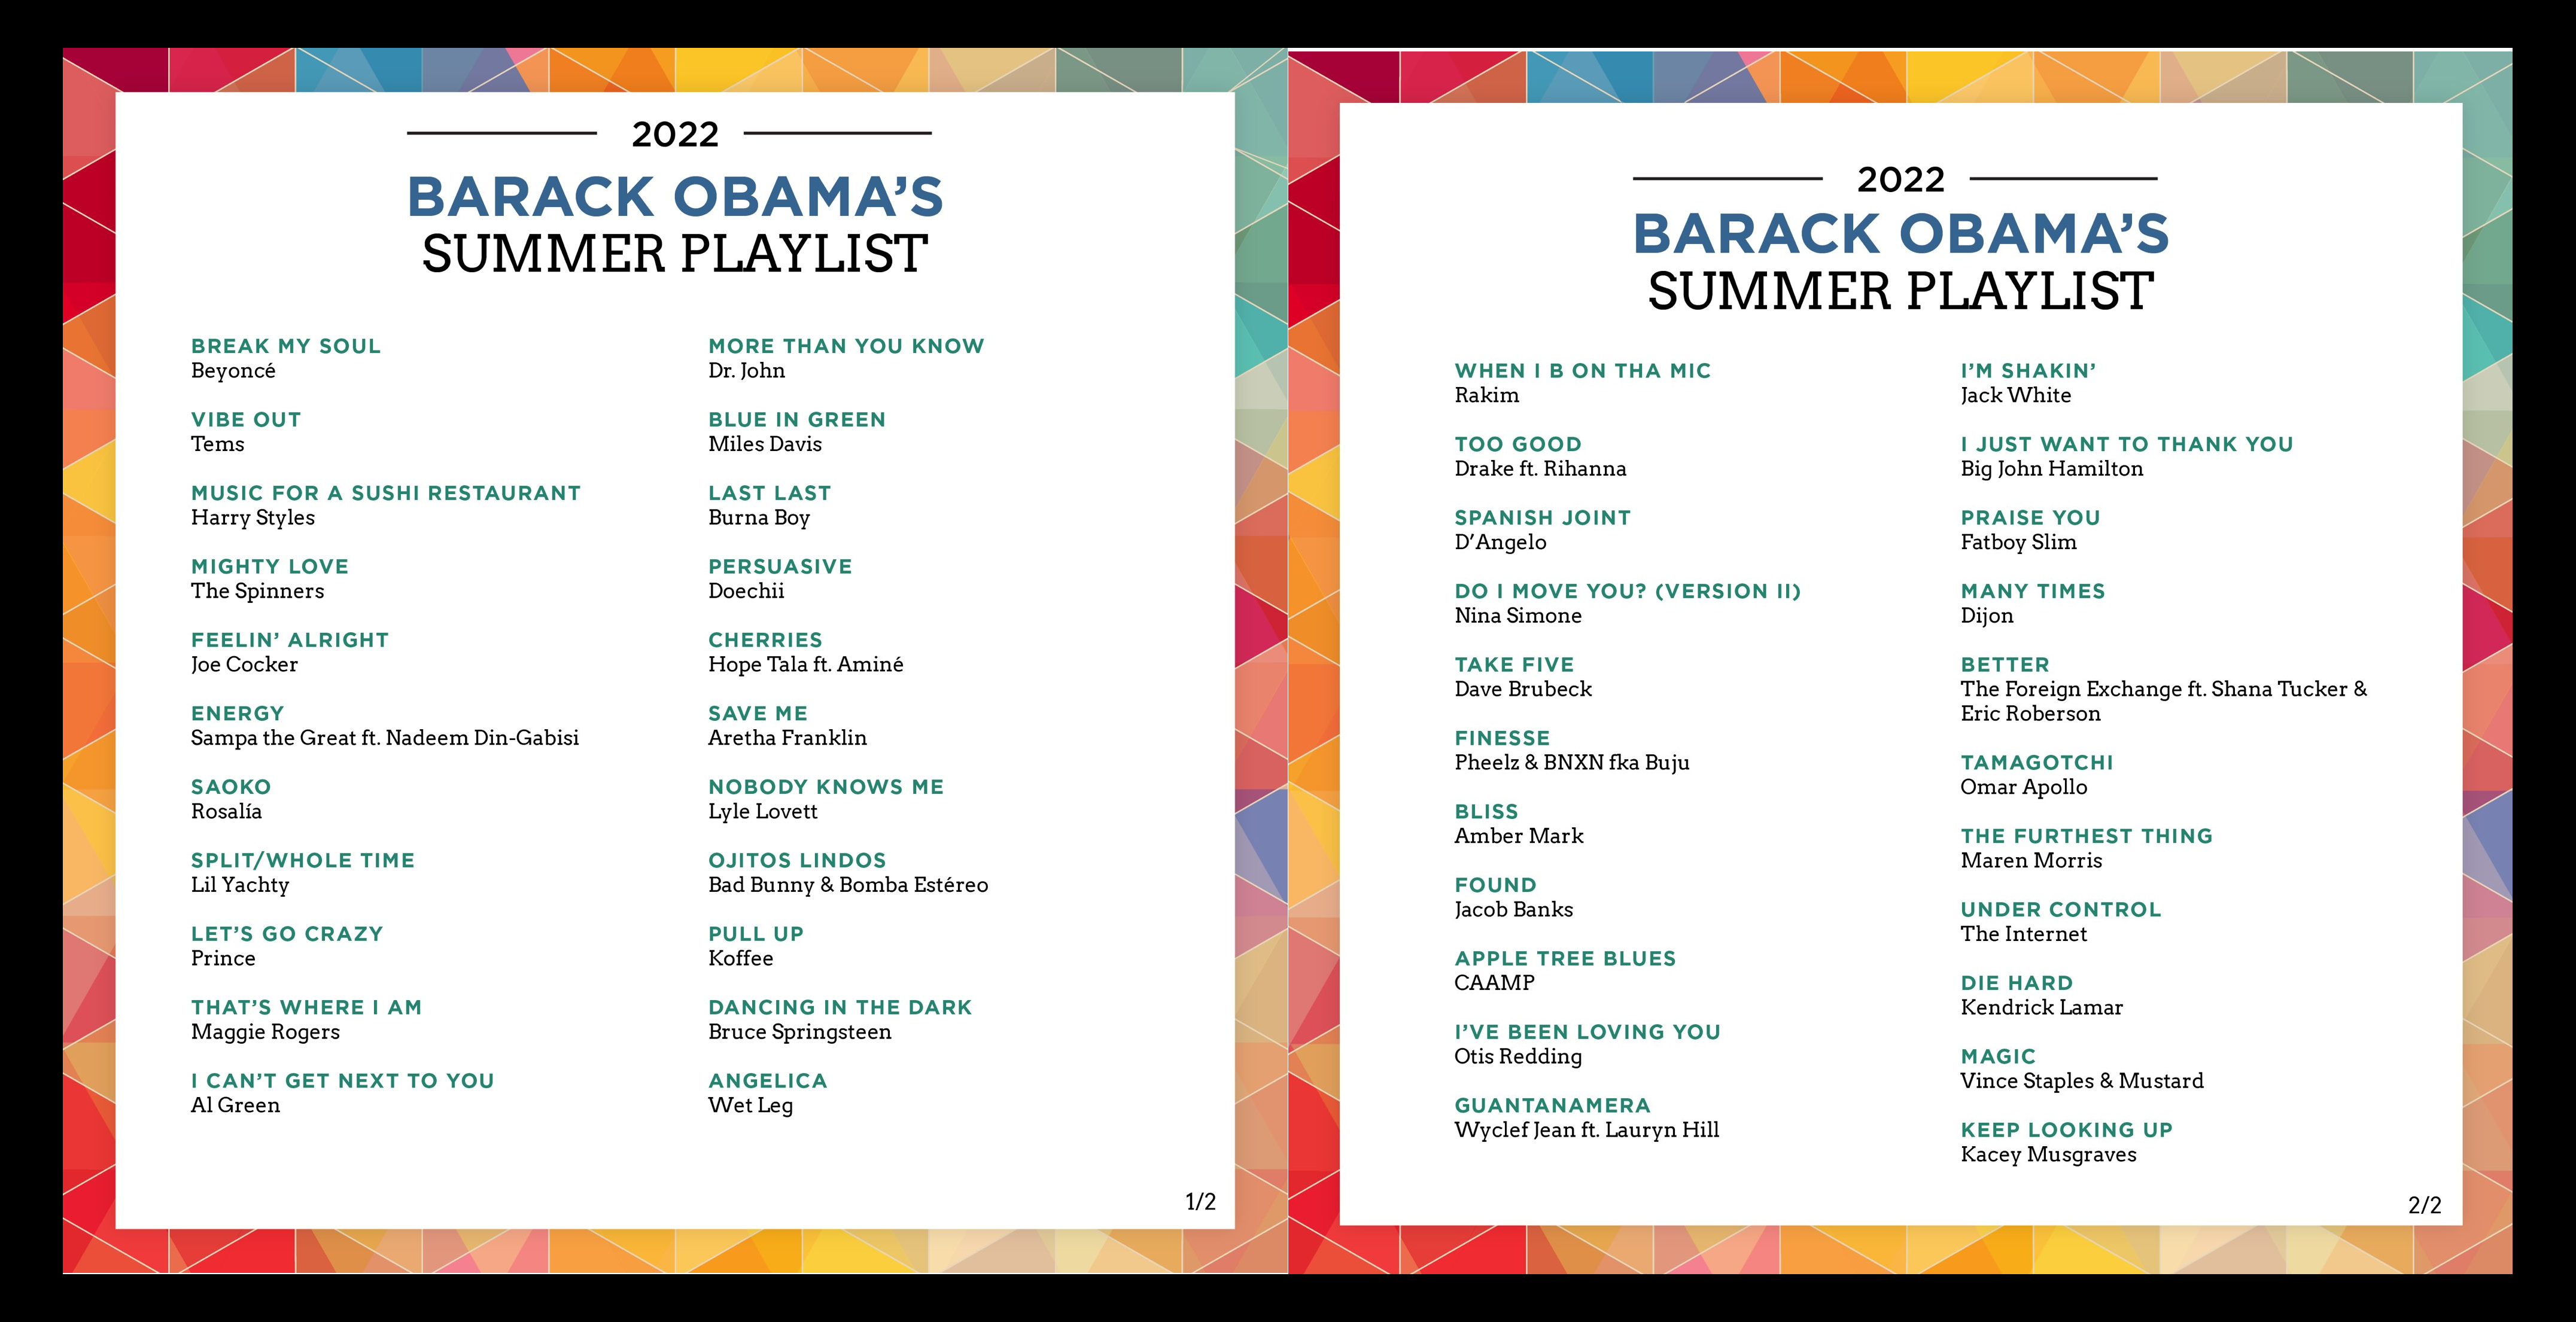 Obama 2022 Summer playlist includes Burna Boy, Tems, Buju, and Pheelz.